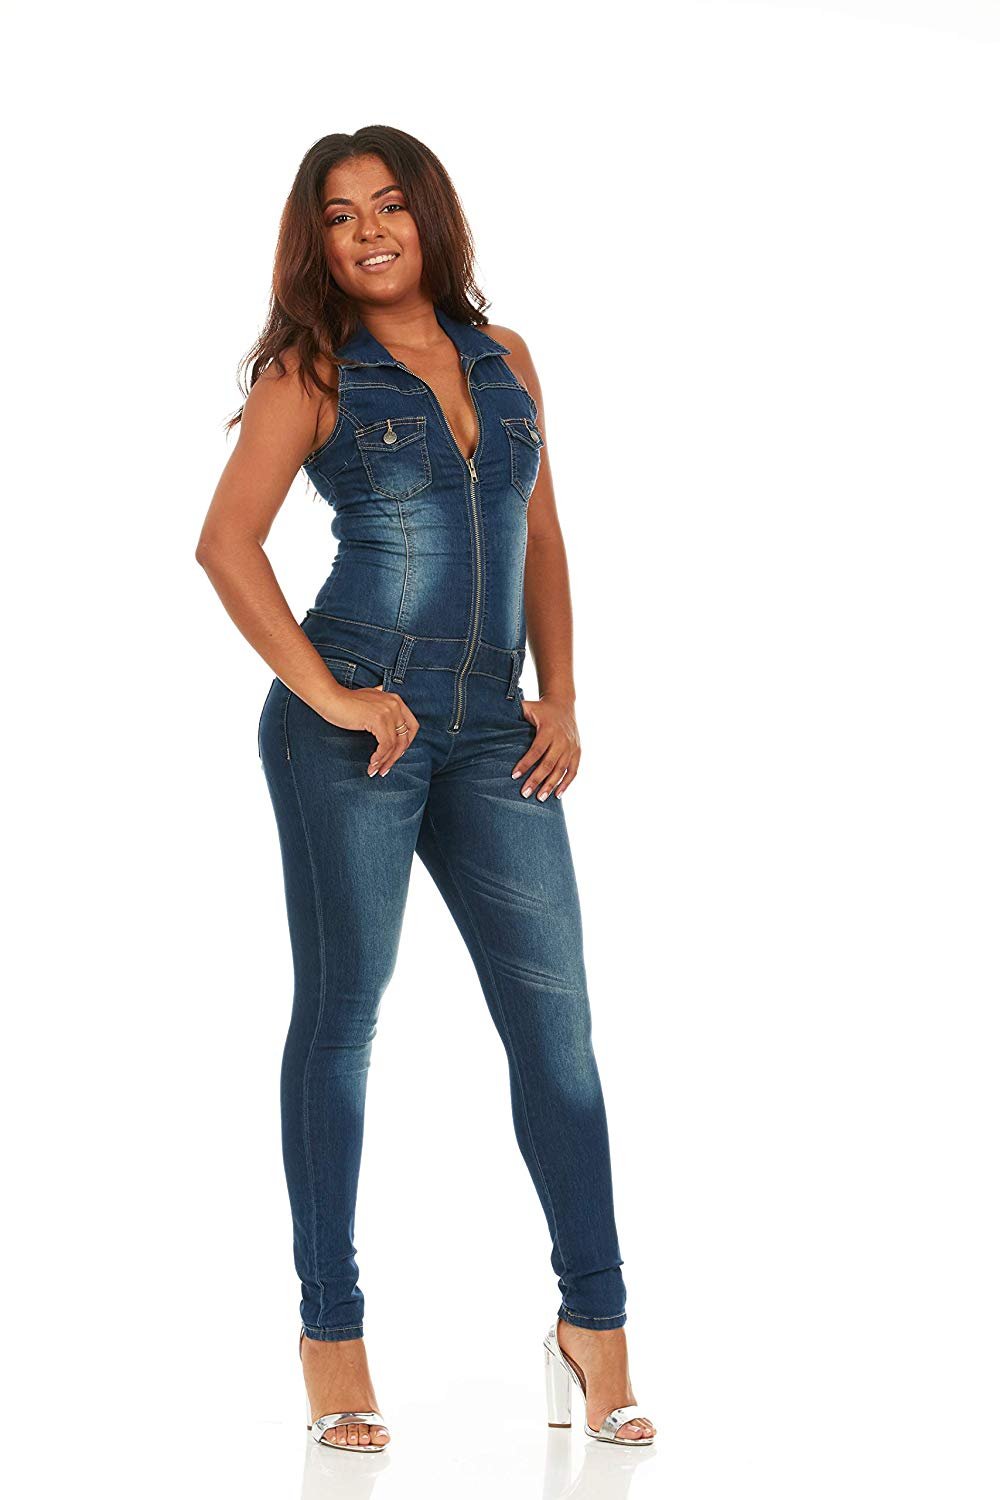 Cute Teen Girl Denim Jumpsuit Jeans for Teen Girls Sleeveless Skinny Fit Overall Junior Size 5 Dark Blue Denim - image 1 of 6